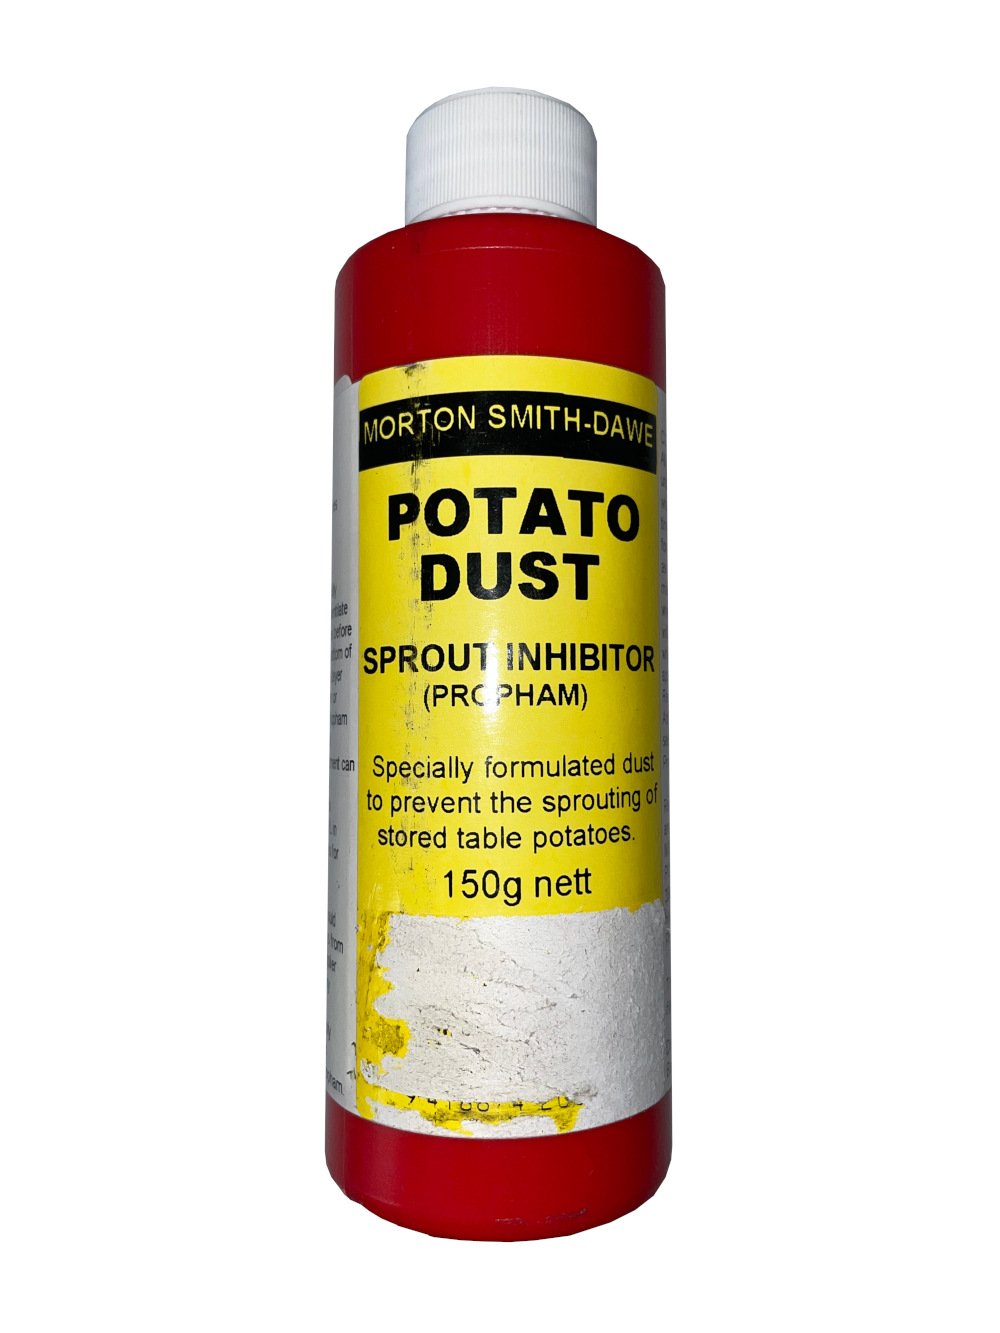 Morton Smith-Dawe Potato Dust (Propham) 150g